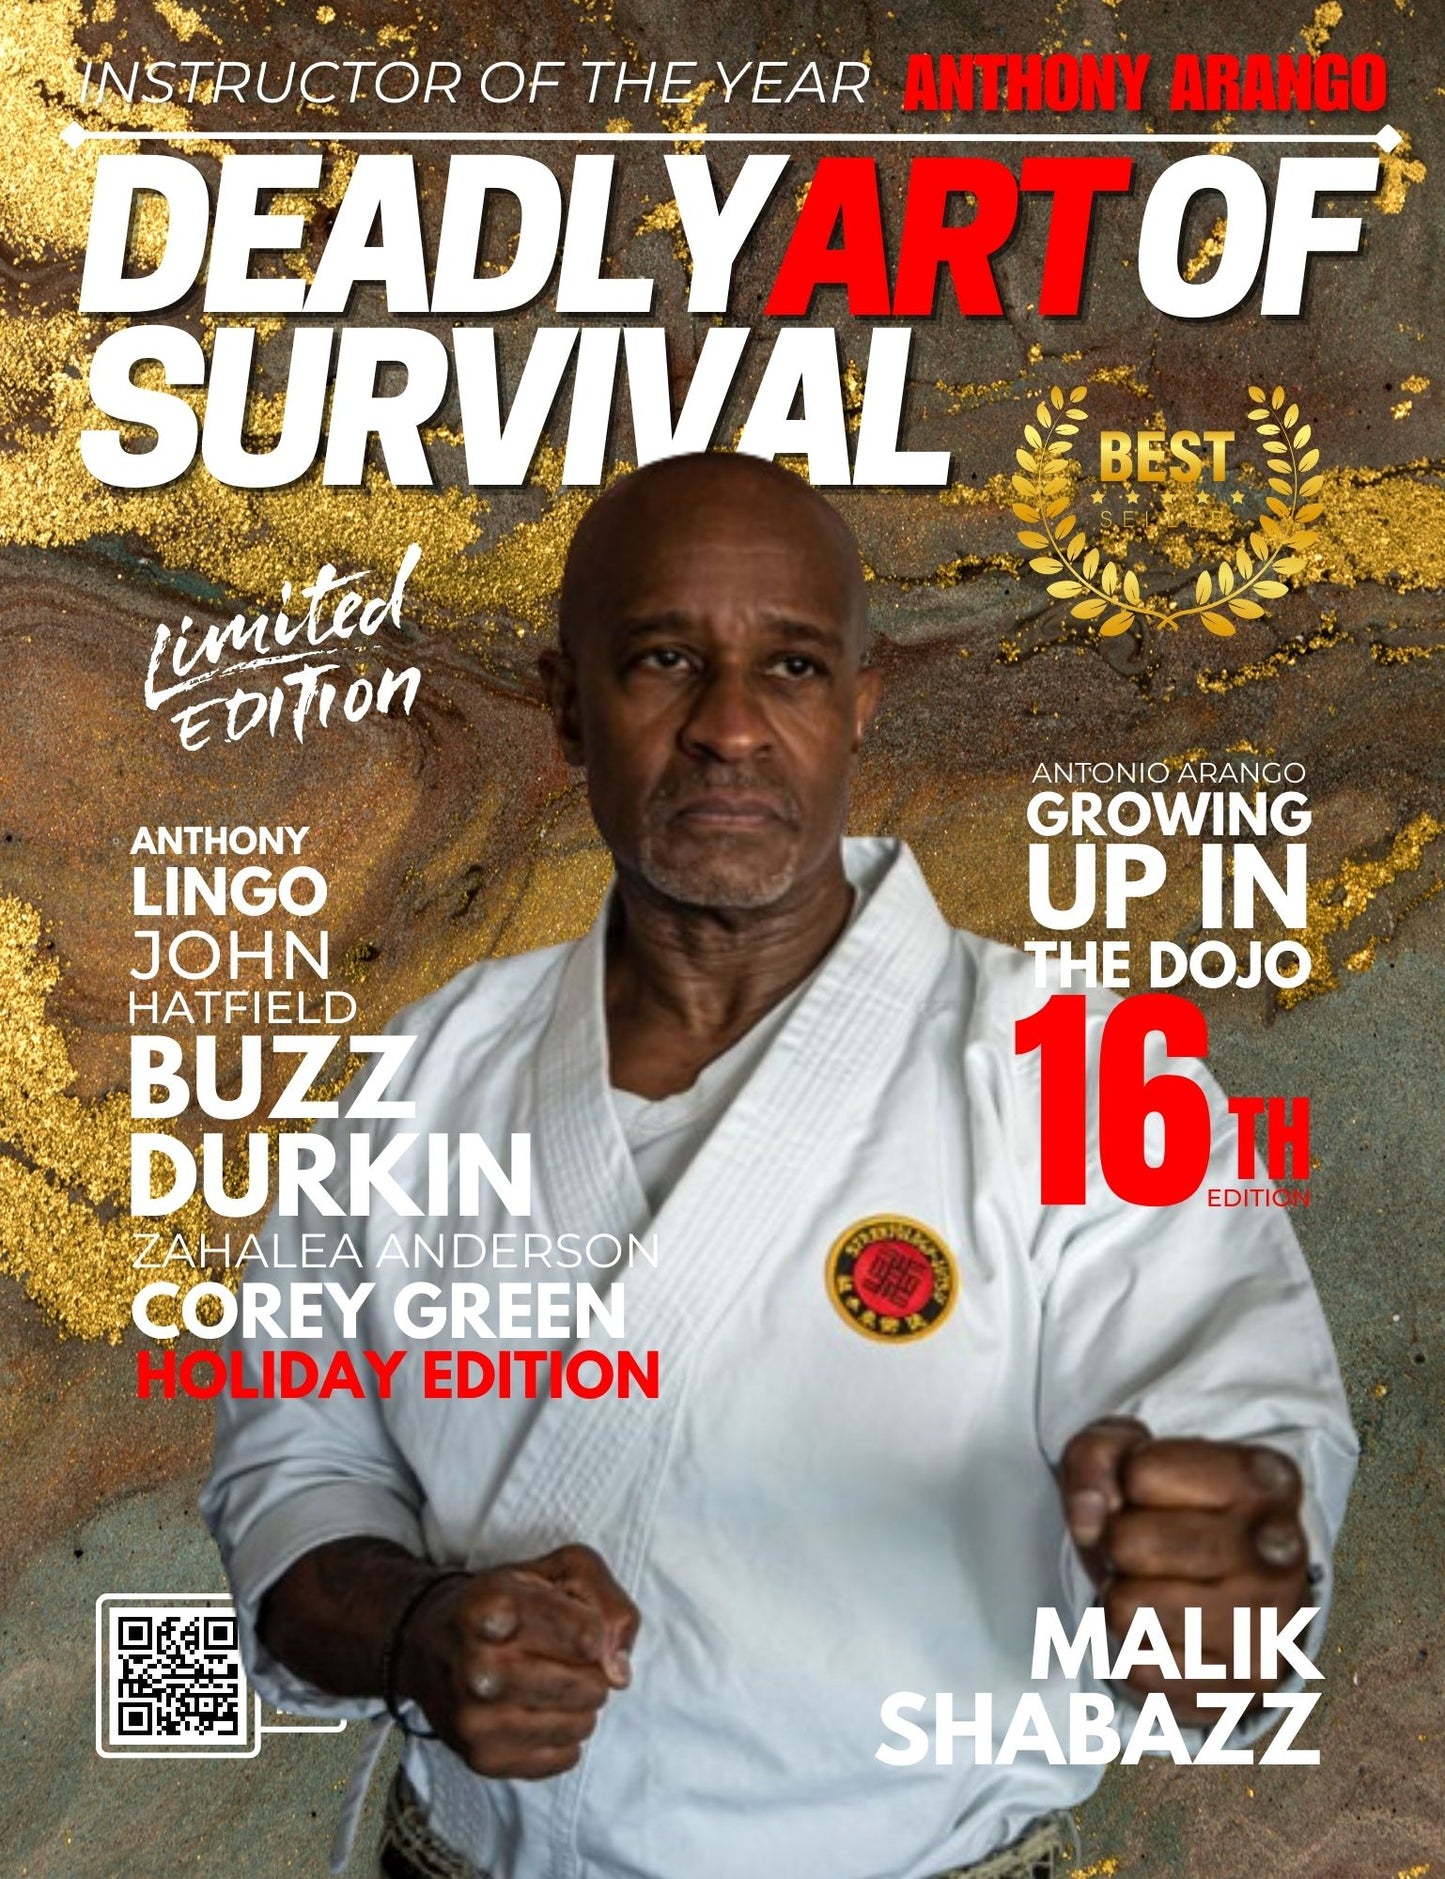 Deadly Art of Survival Magazine 16th Edition: Featuring Anthony Arango - Buzz Durkin - Abdul Shabazz The #1 Martial Arts Magazine Worldwide deadlyartofsurvival.com